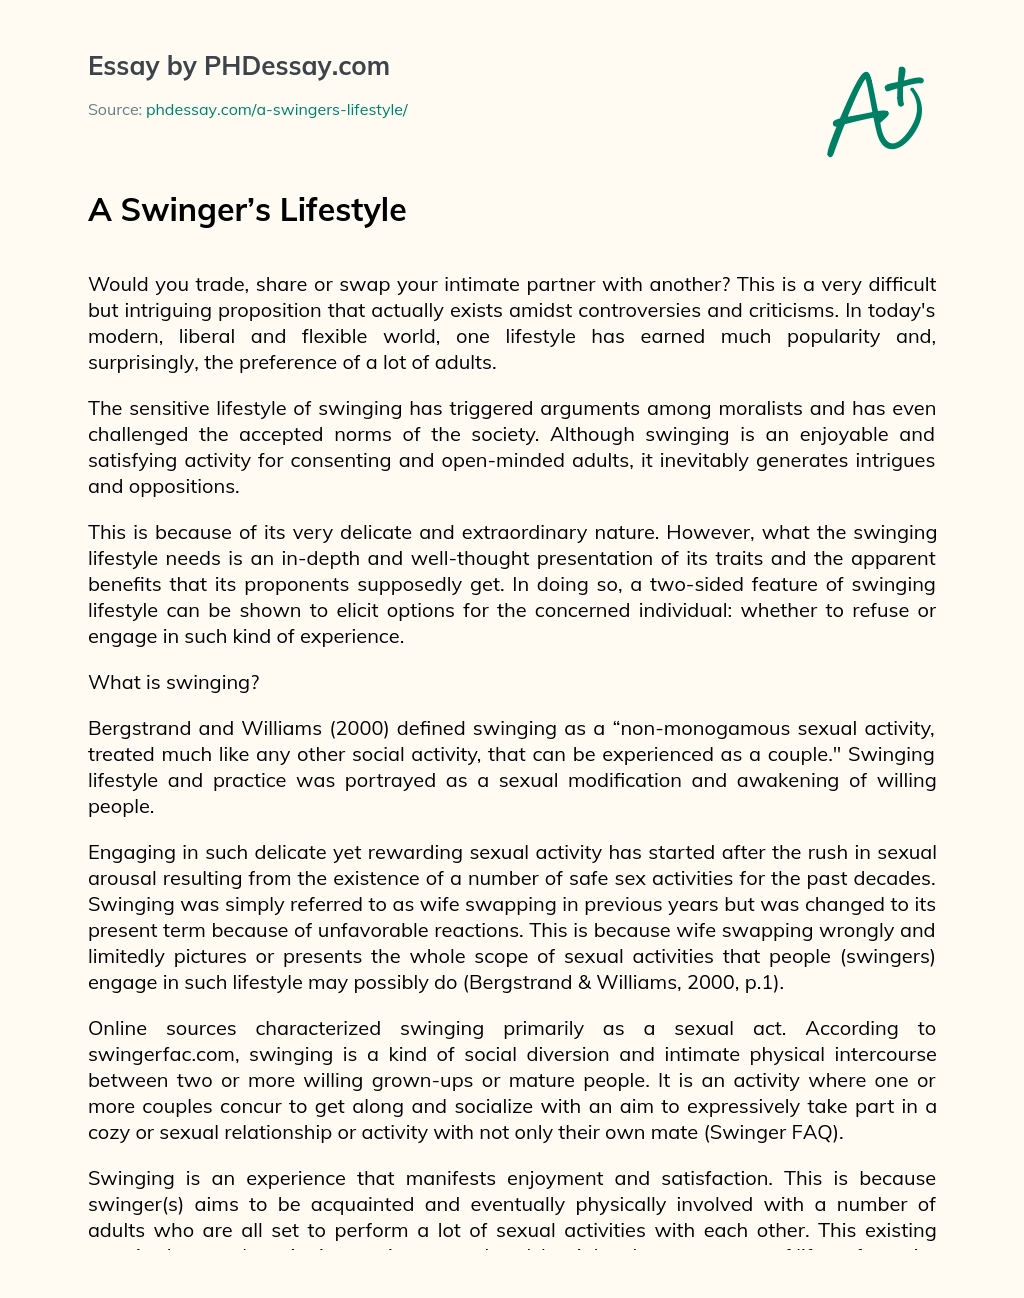 A Swinger’s Lifestyle essay